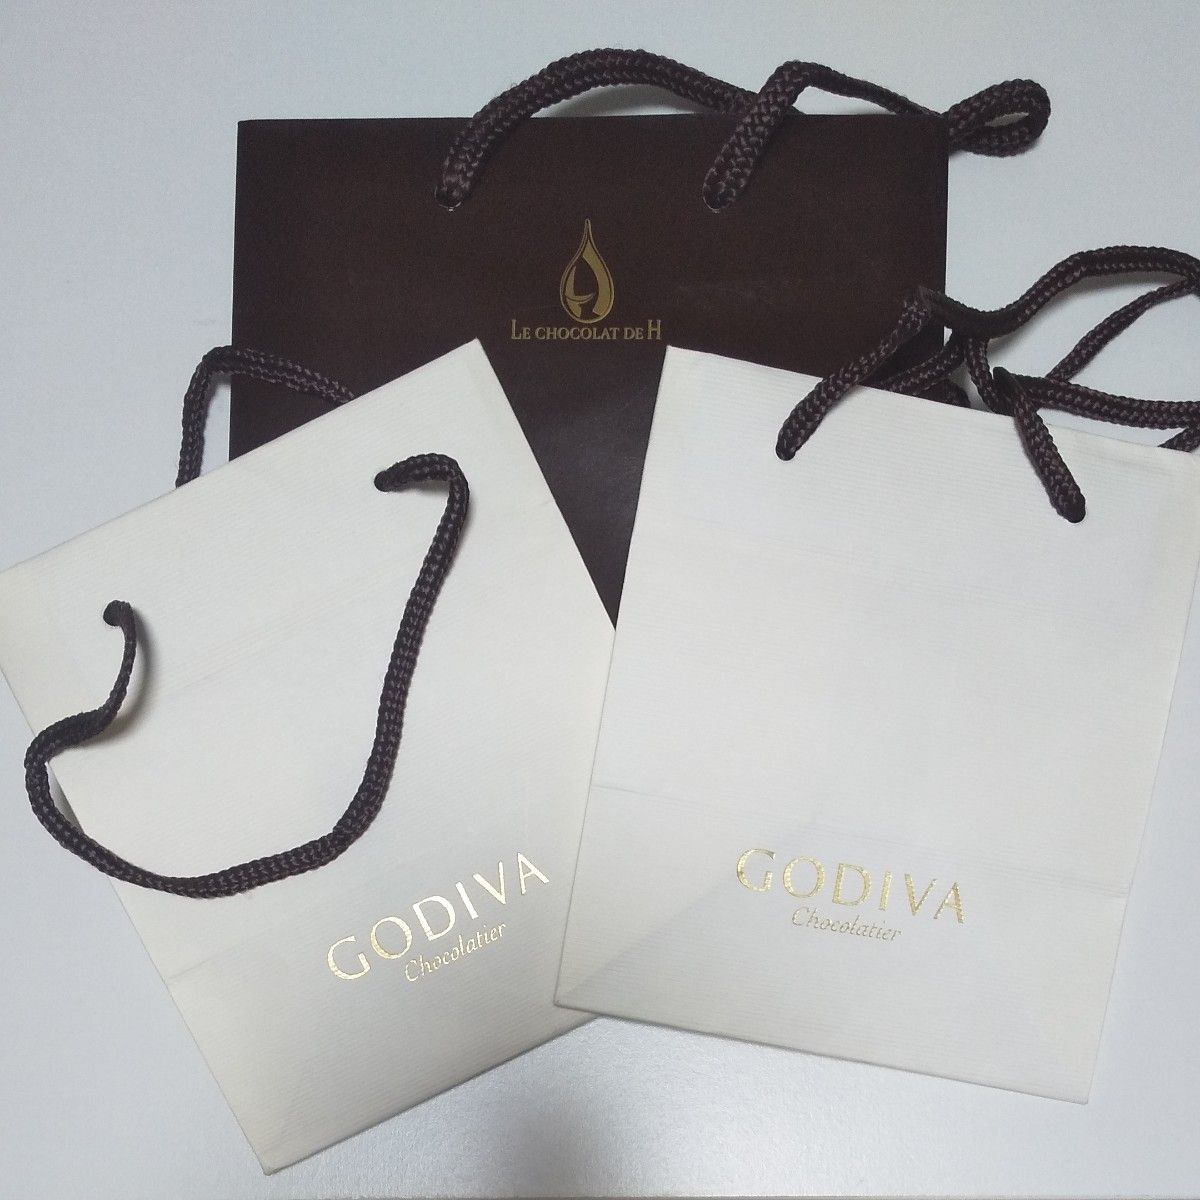 Le chocolate DE Ｈ と GODIVA の ショップ袋